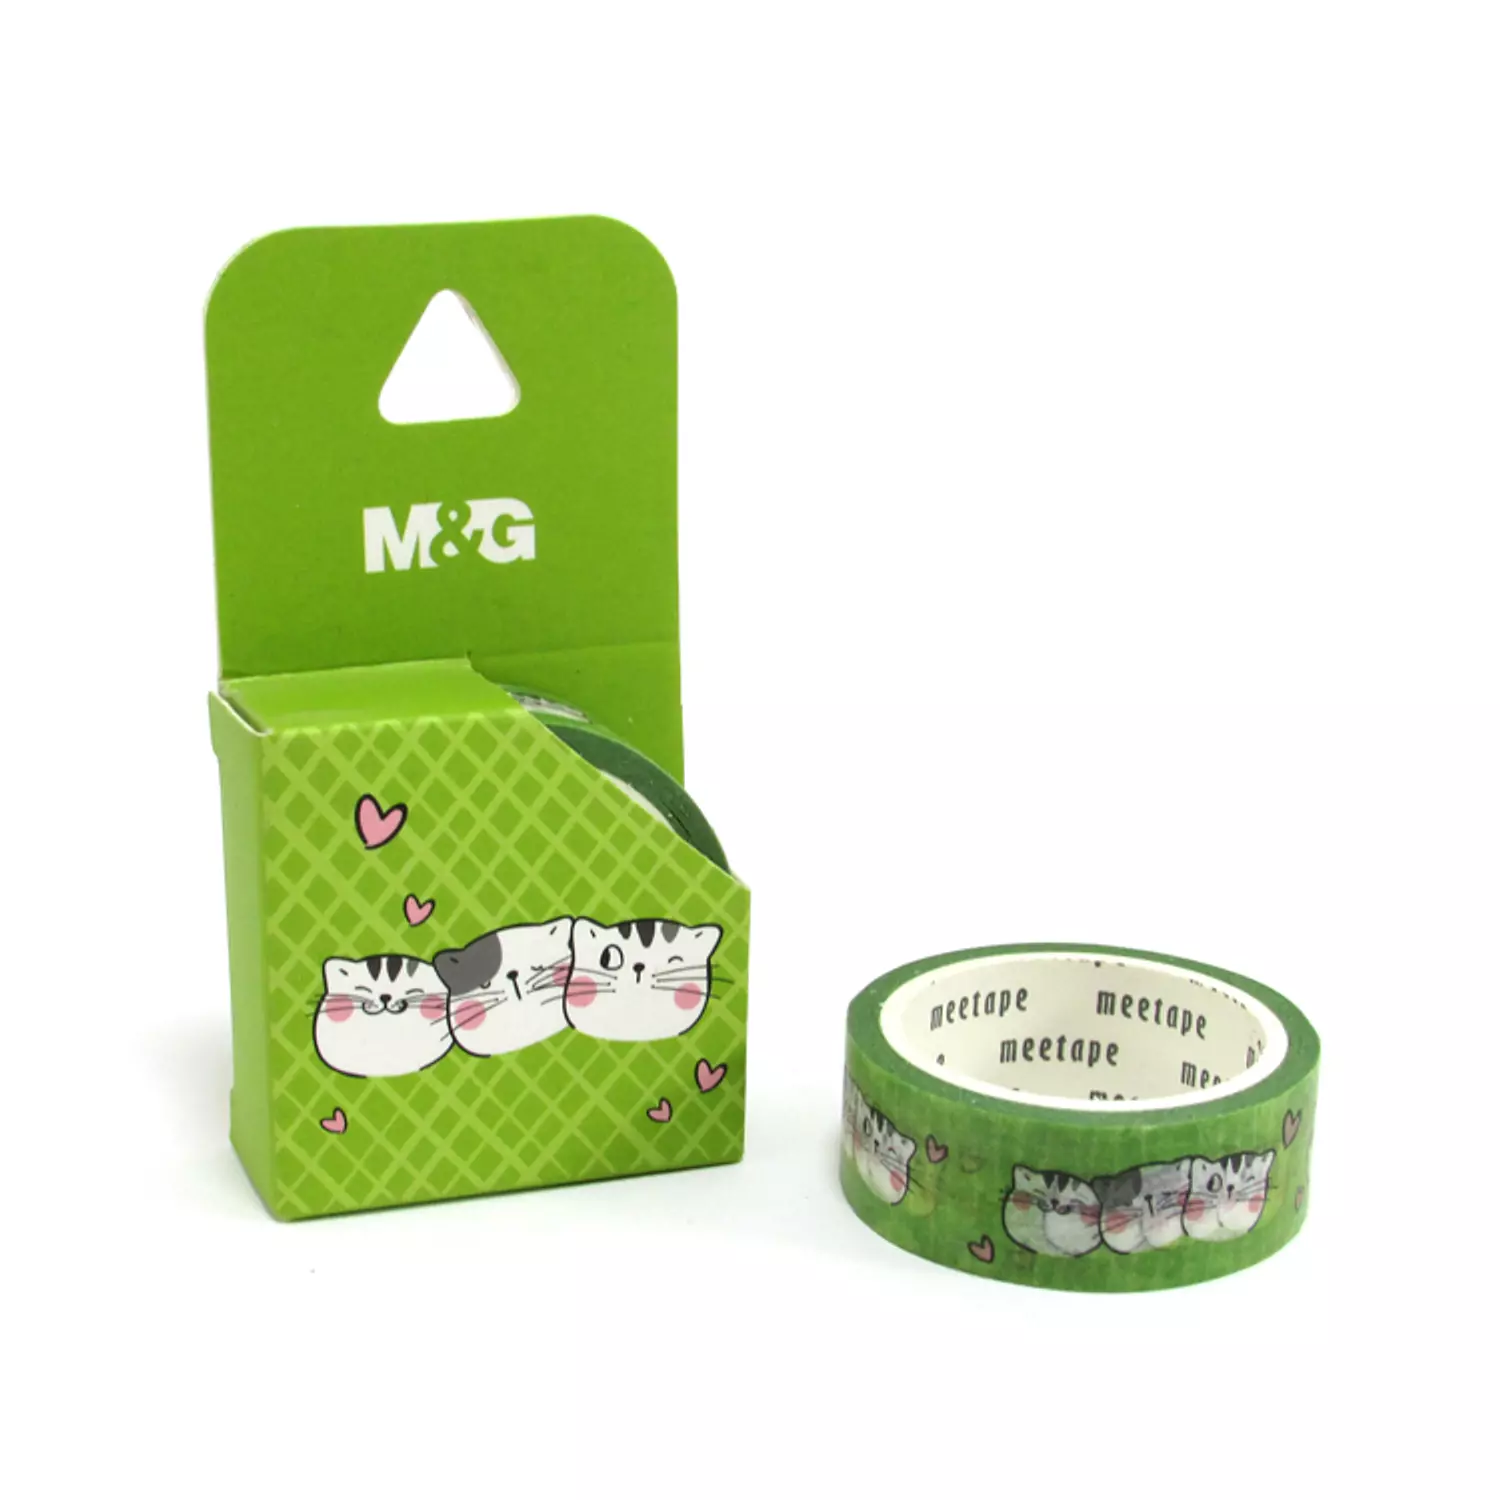 M&G washi tape - M7 0